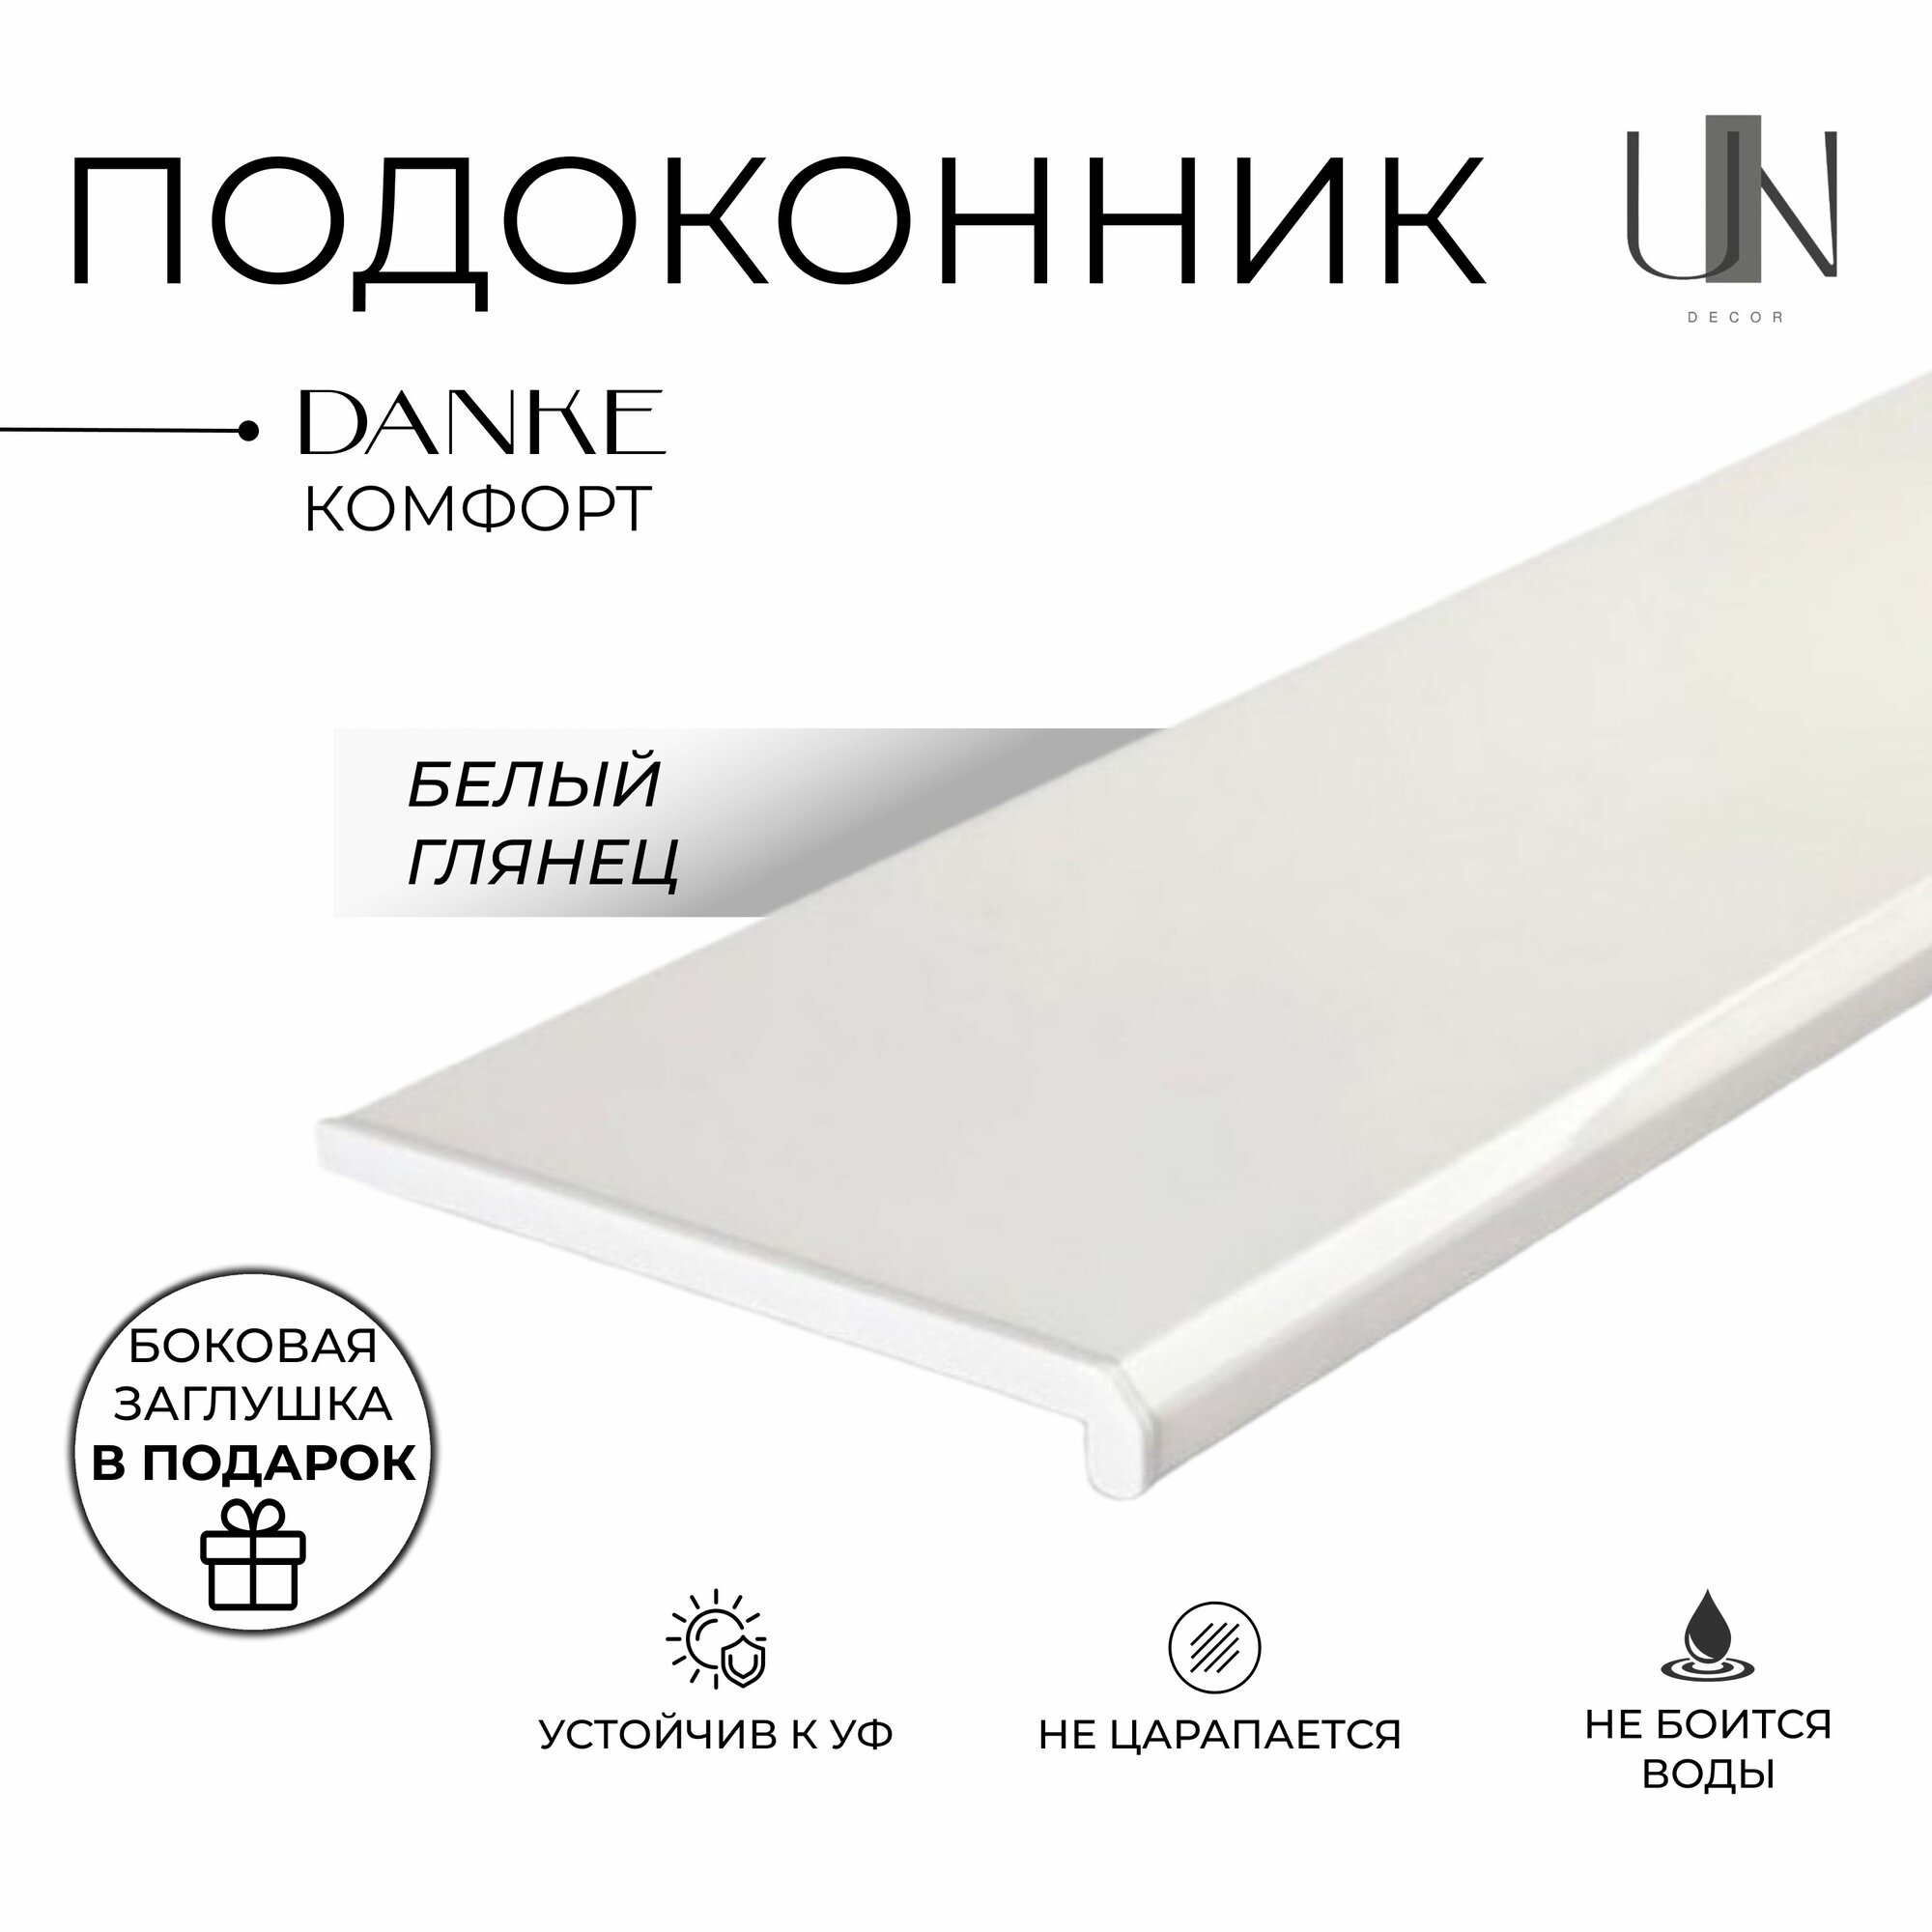 Подоконник Данке Белый глянцевый коллекция DANKE KOMFORT 30 см х 17 м. пог.(300мм*1700мм)